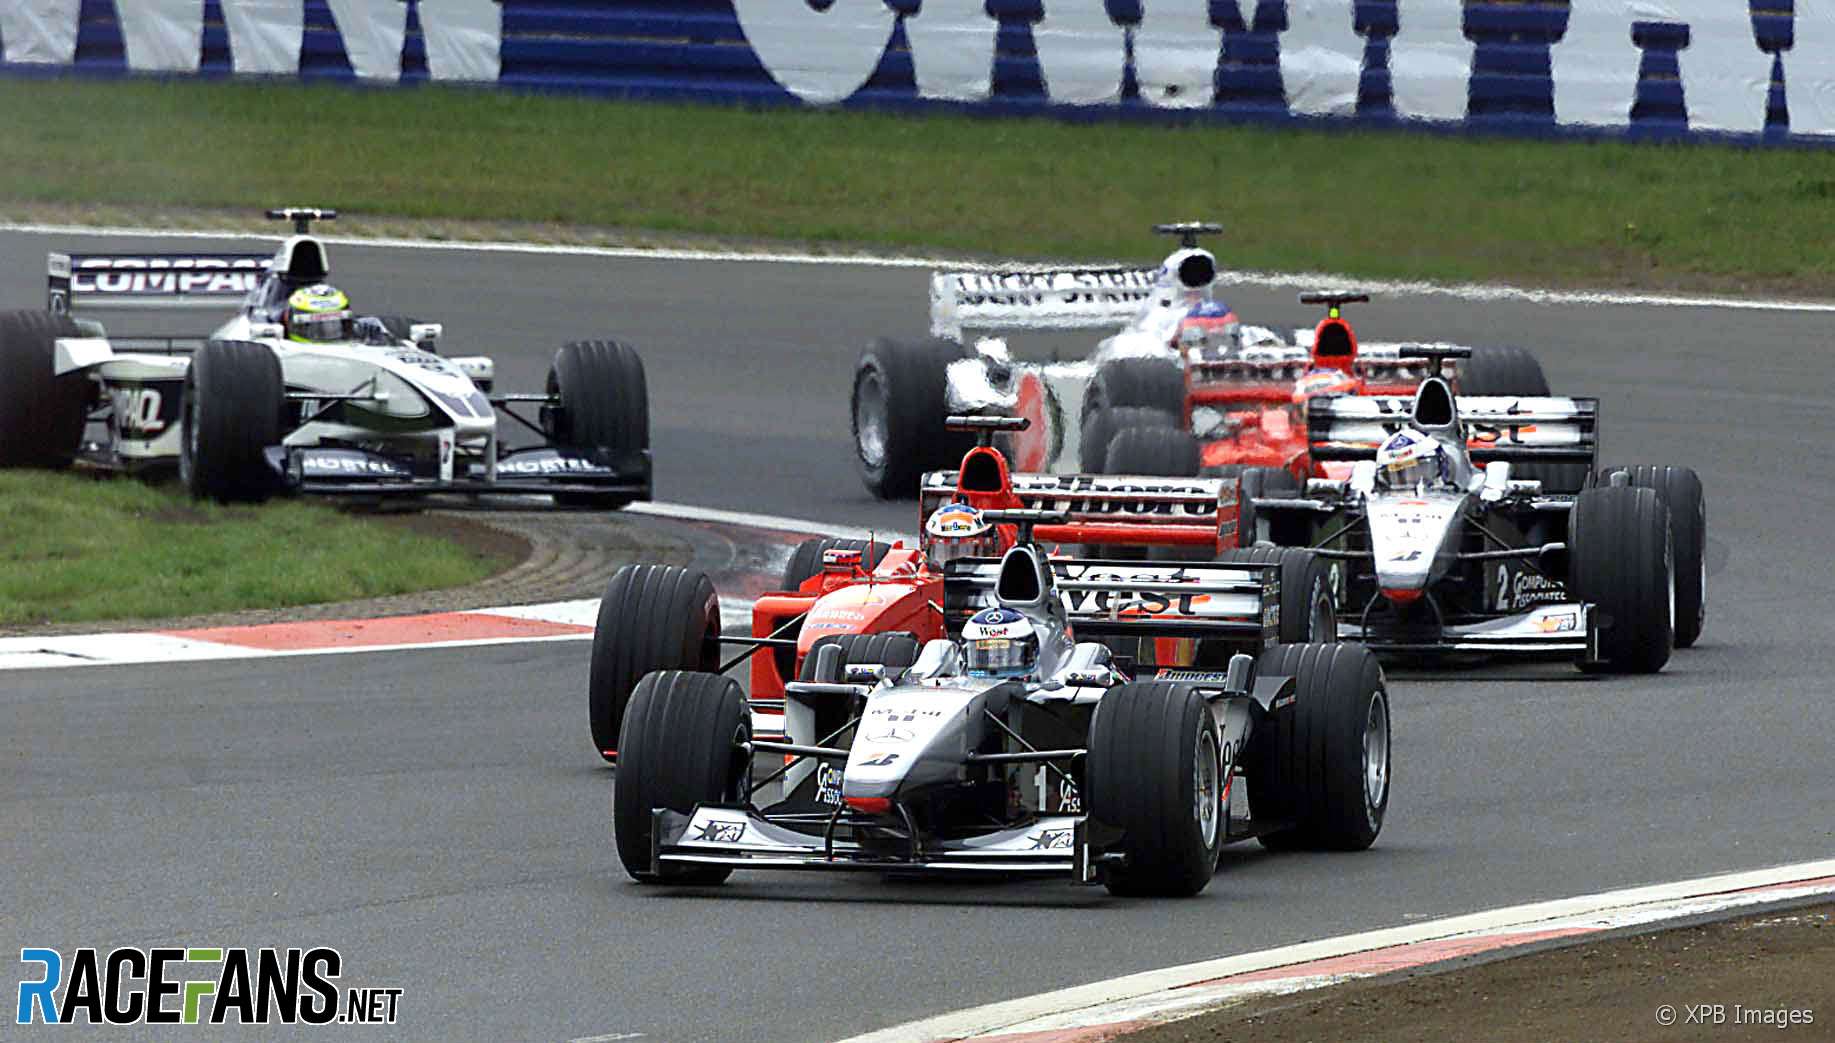 Start, Mika Hakkinen, Michael Schumacher, David Coulthard. Rubens Barrichello, Nurburgring, 2000